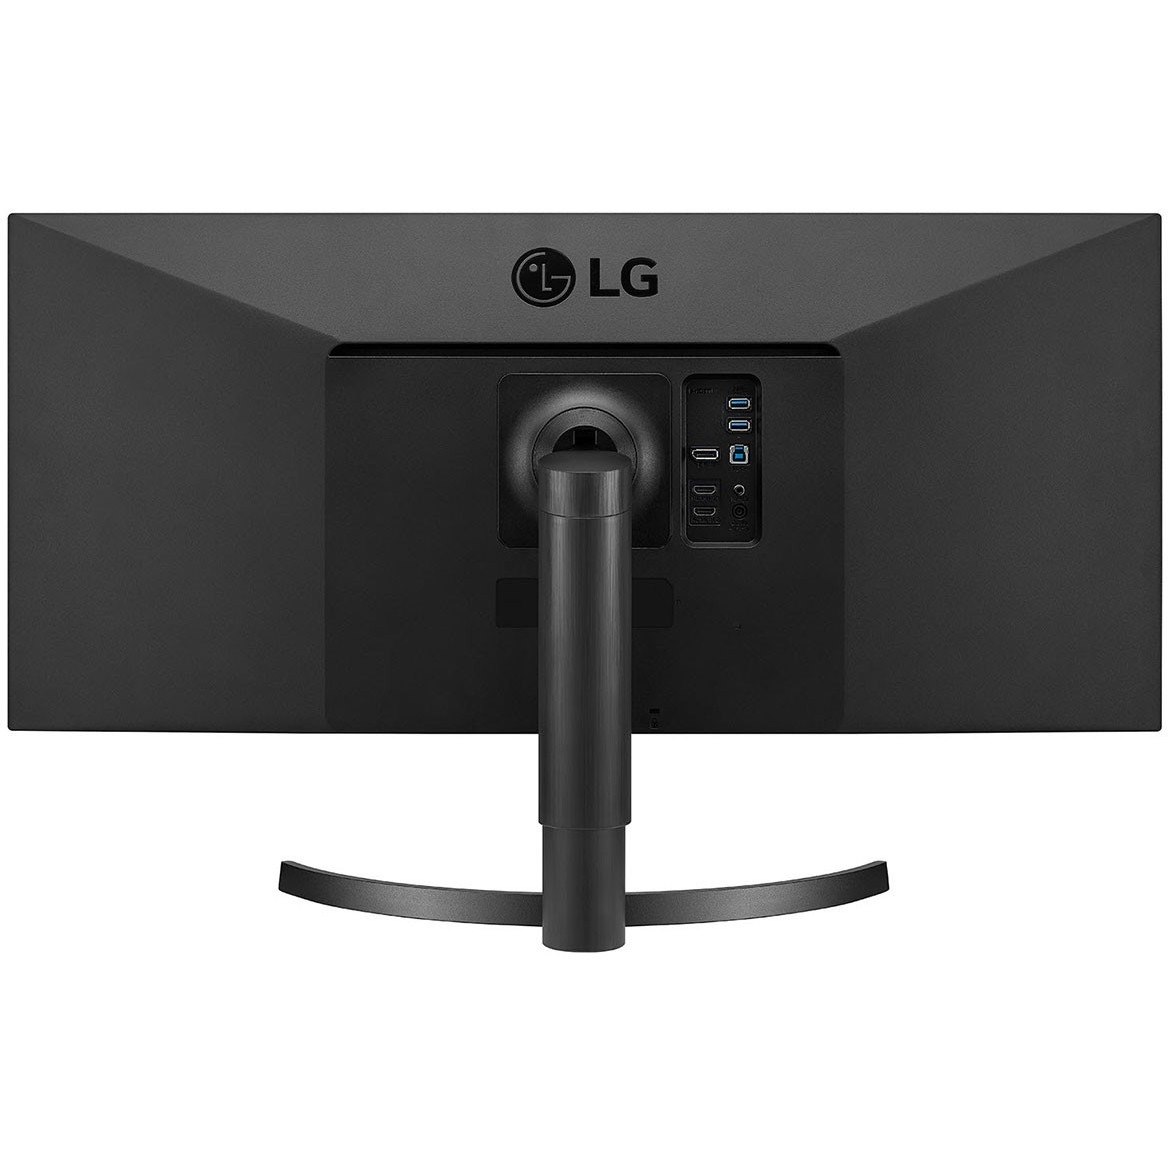 LG Ultrawide 34WN750-B 34" Class WQHD Gaming LCD Monitor - 21:9